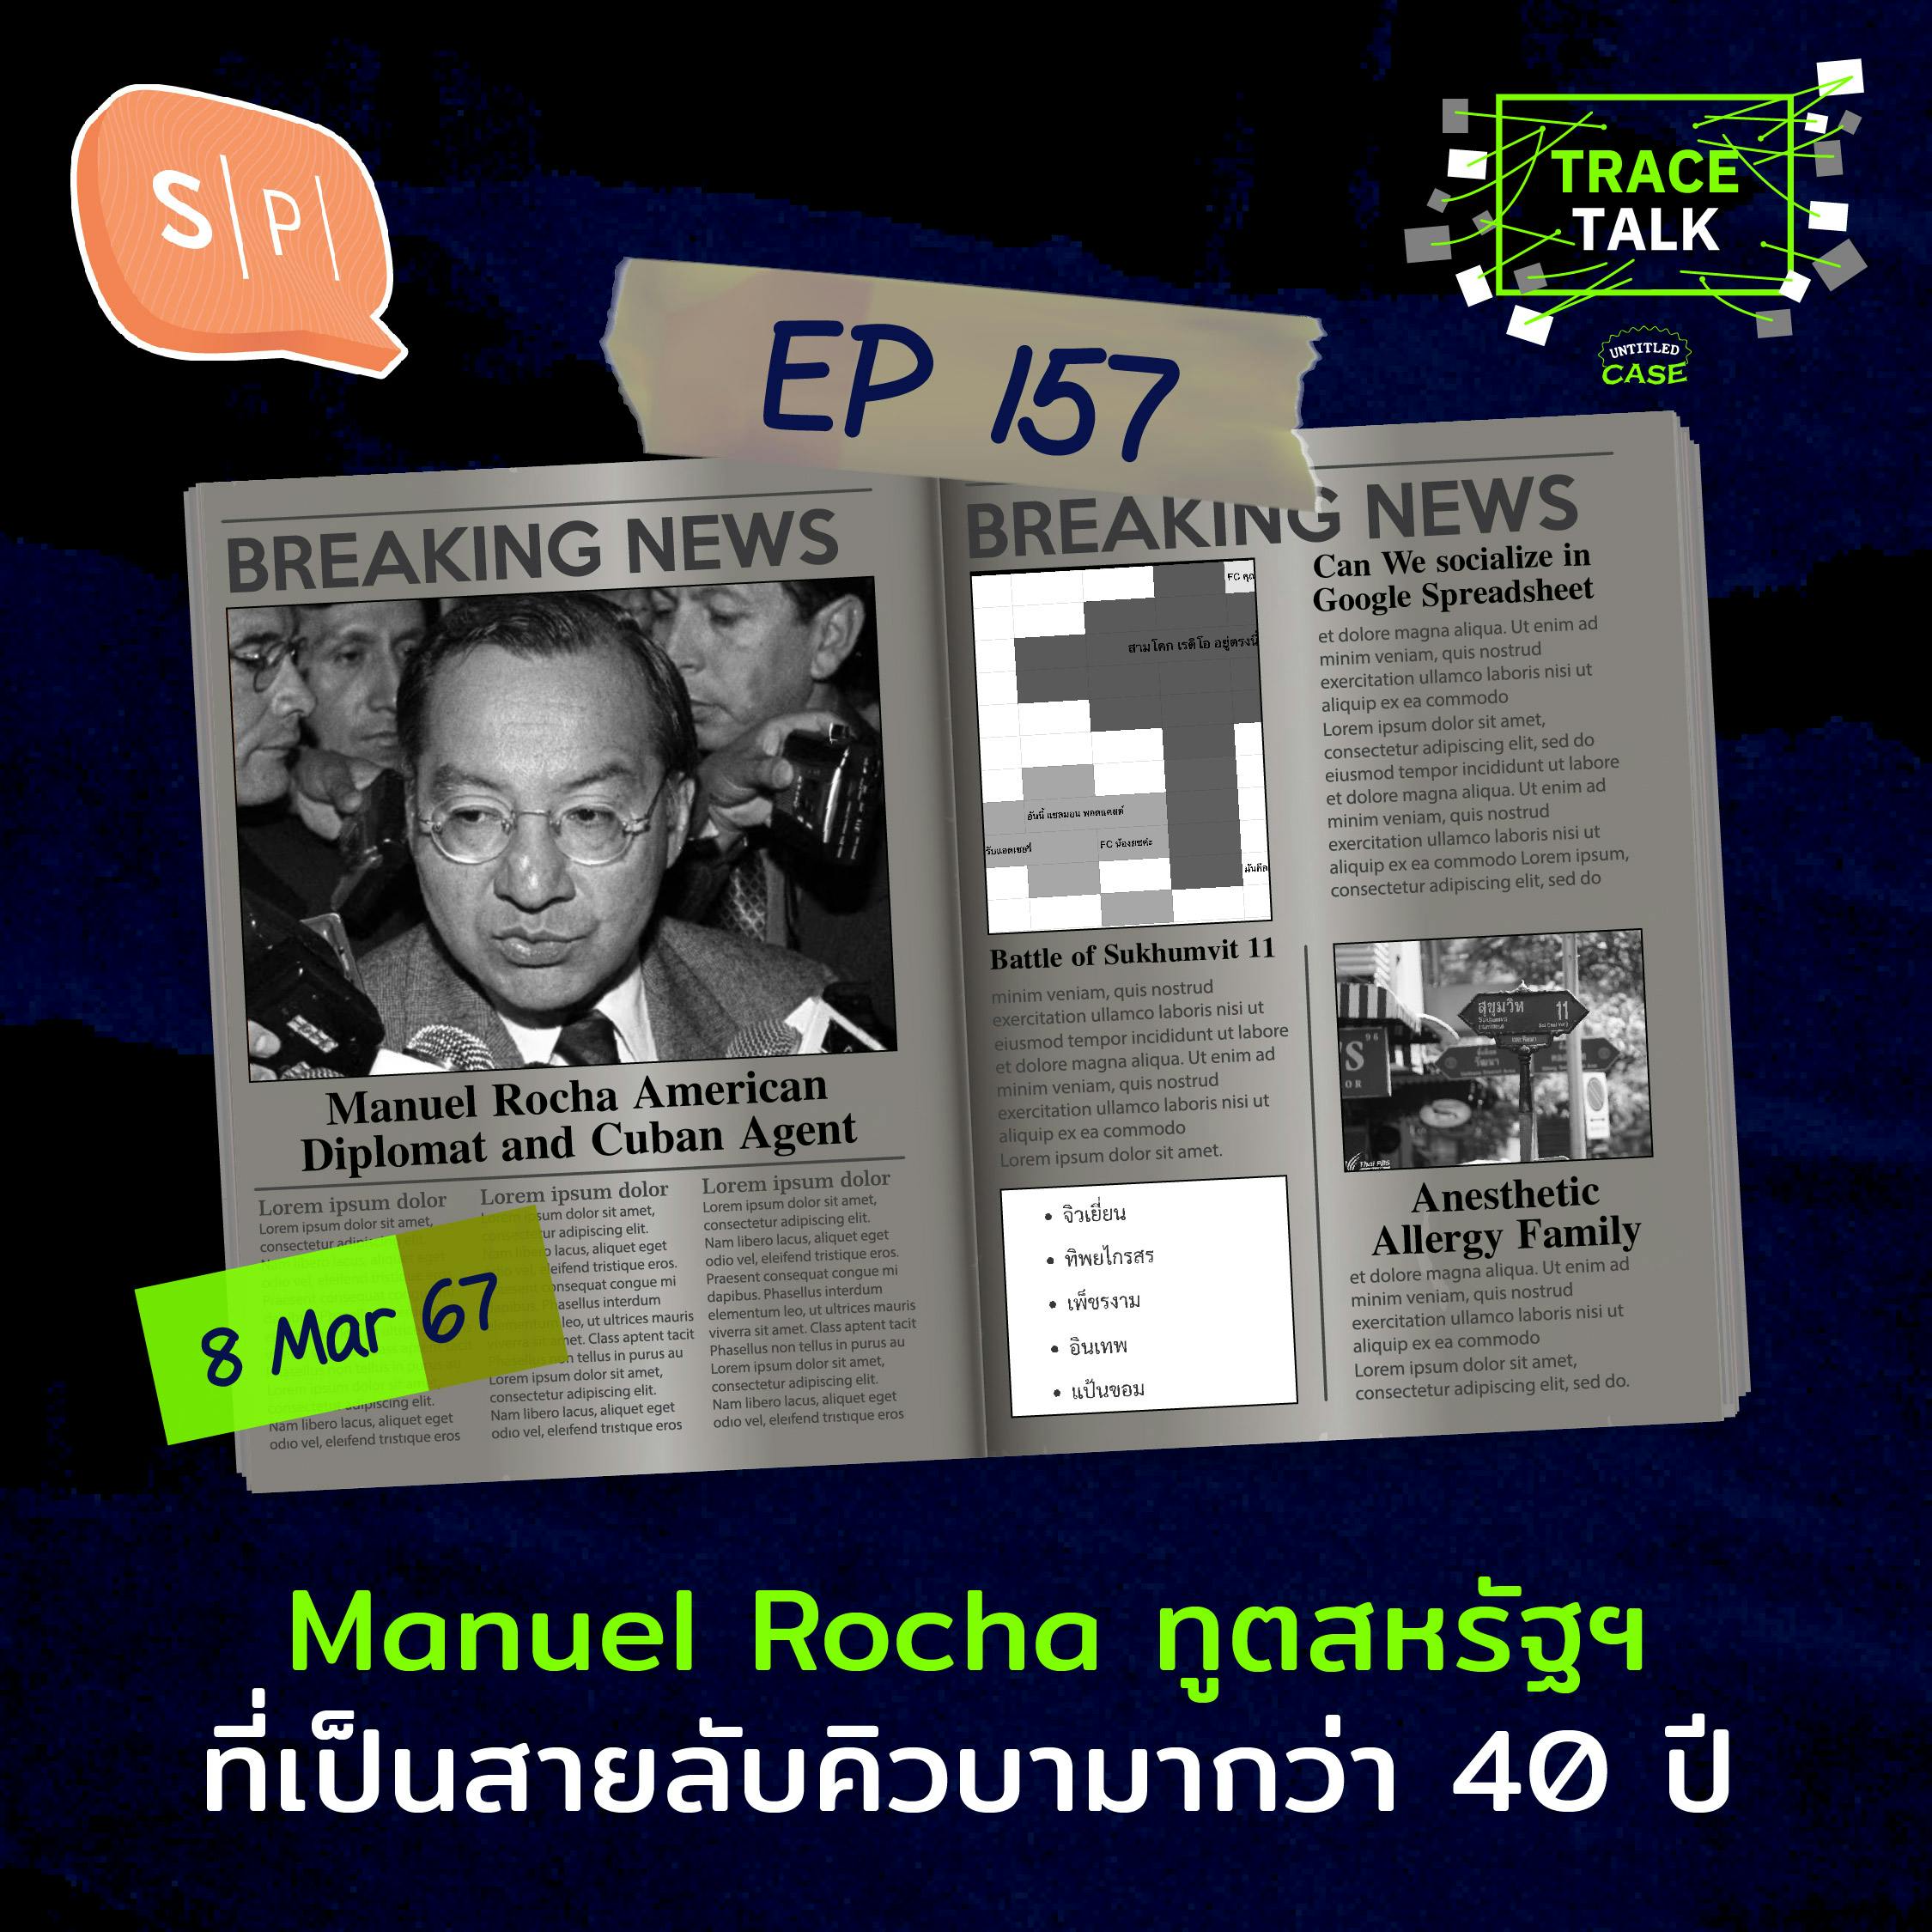 Manuel Rocha ทูตสหรัฐฯ ที่เป็นสายลับคิวบามากว่า 40 ปี | Trace Talk EP157